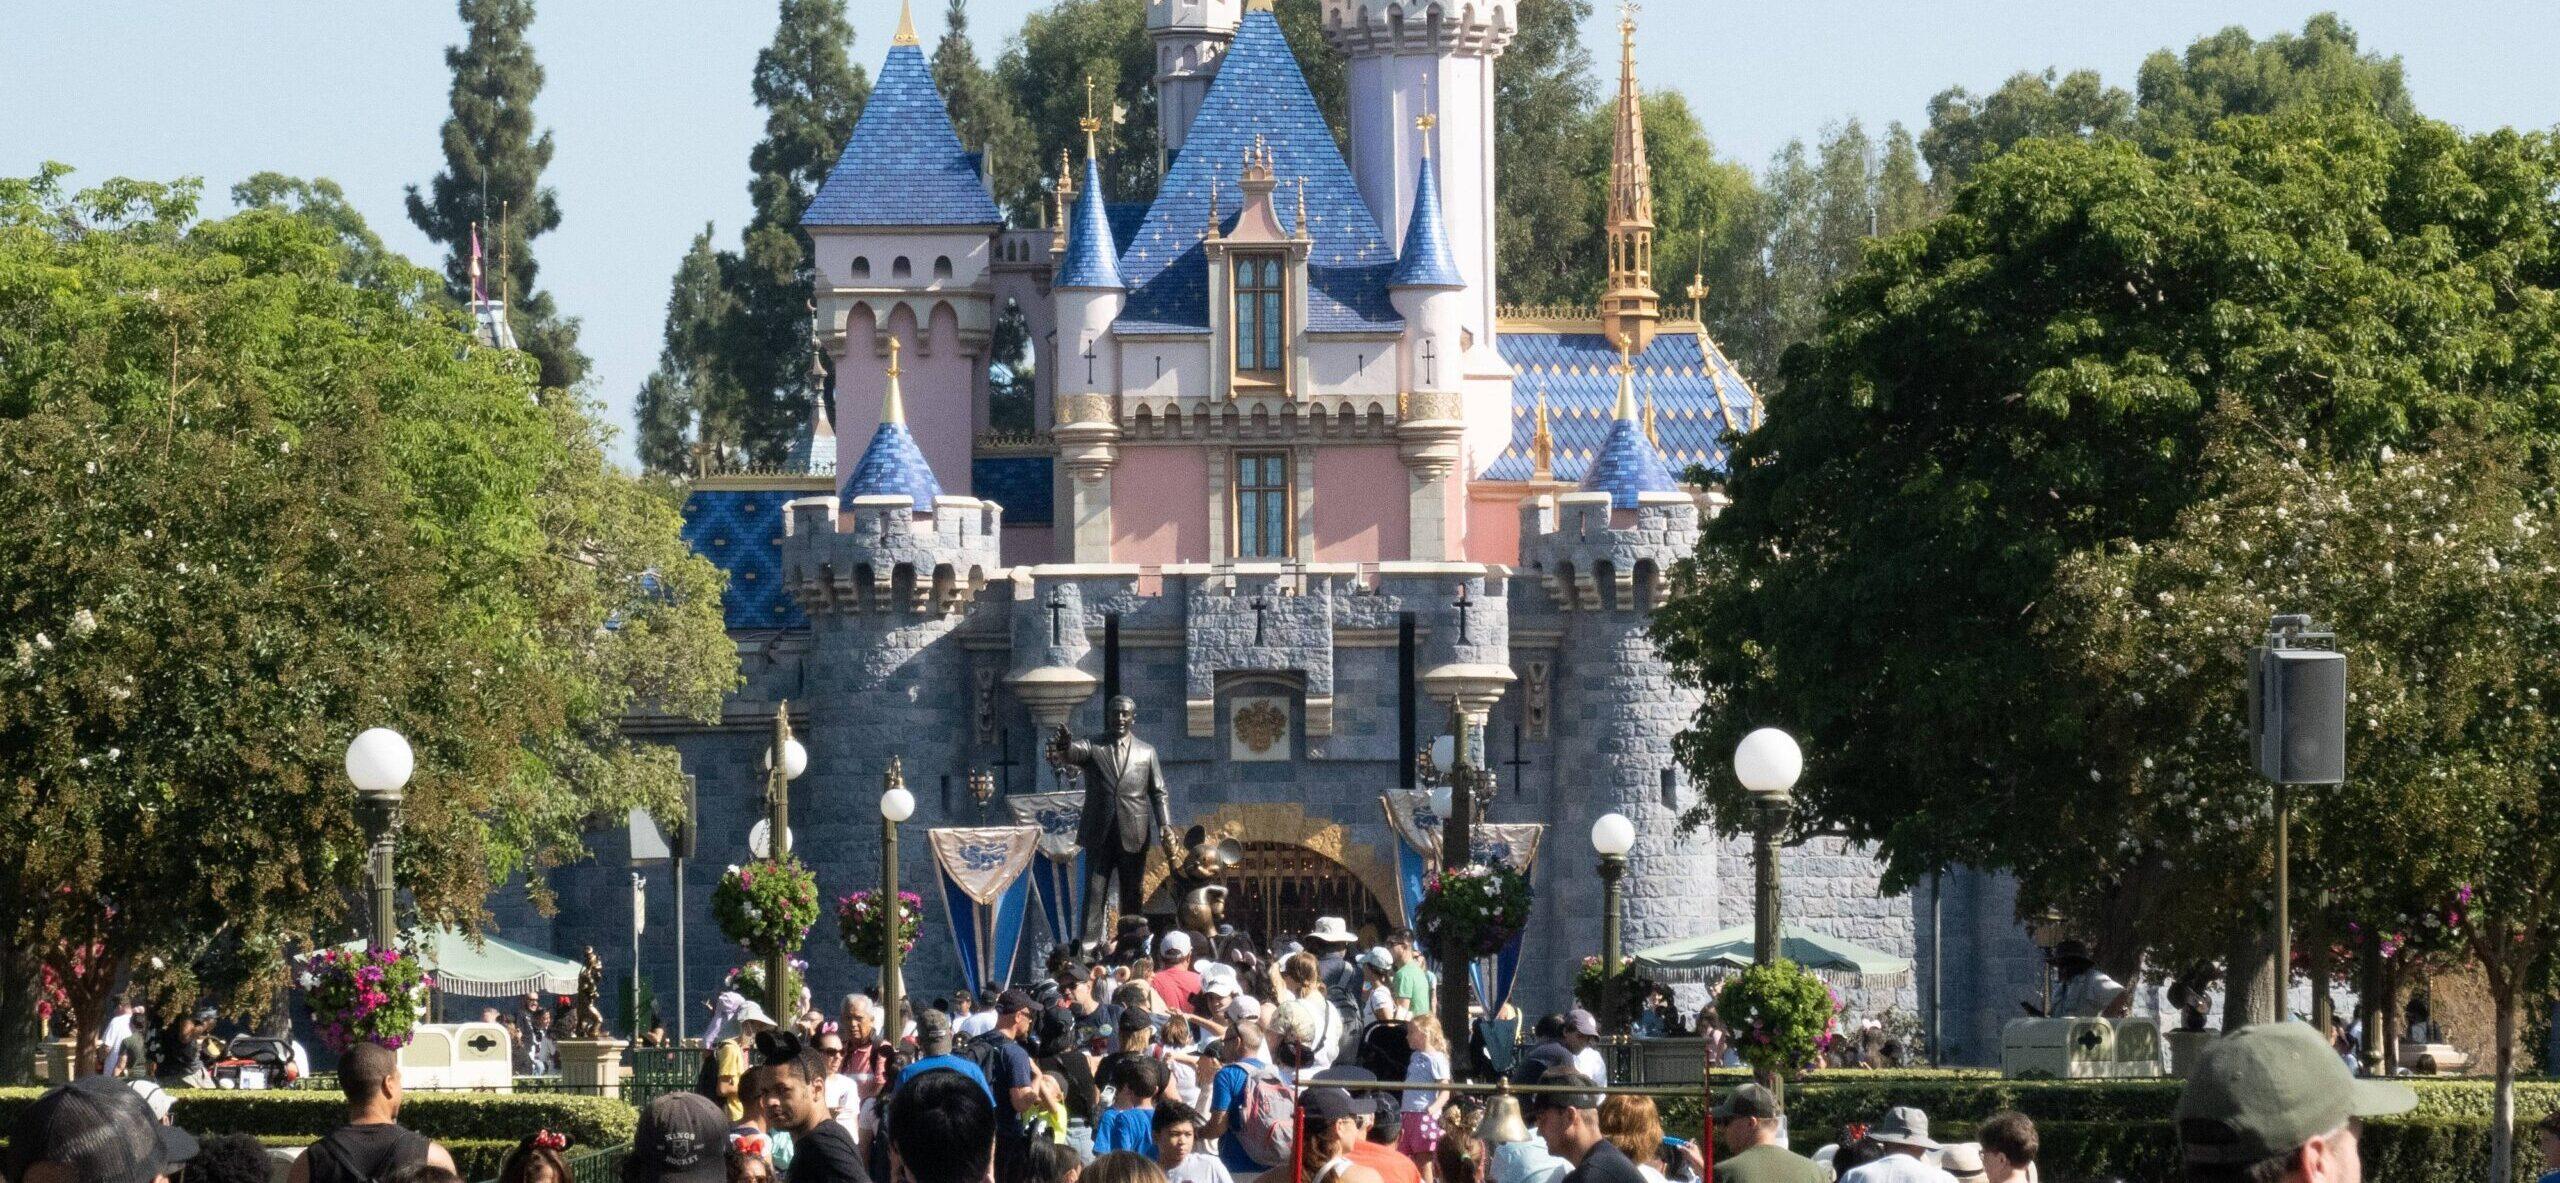 Guest Recalls Time A Toddler Peed On A Stranger At Disneyland